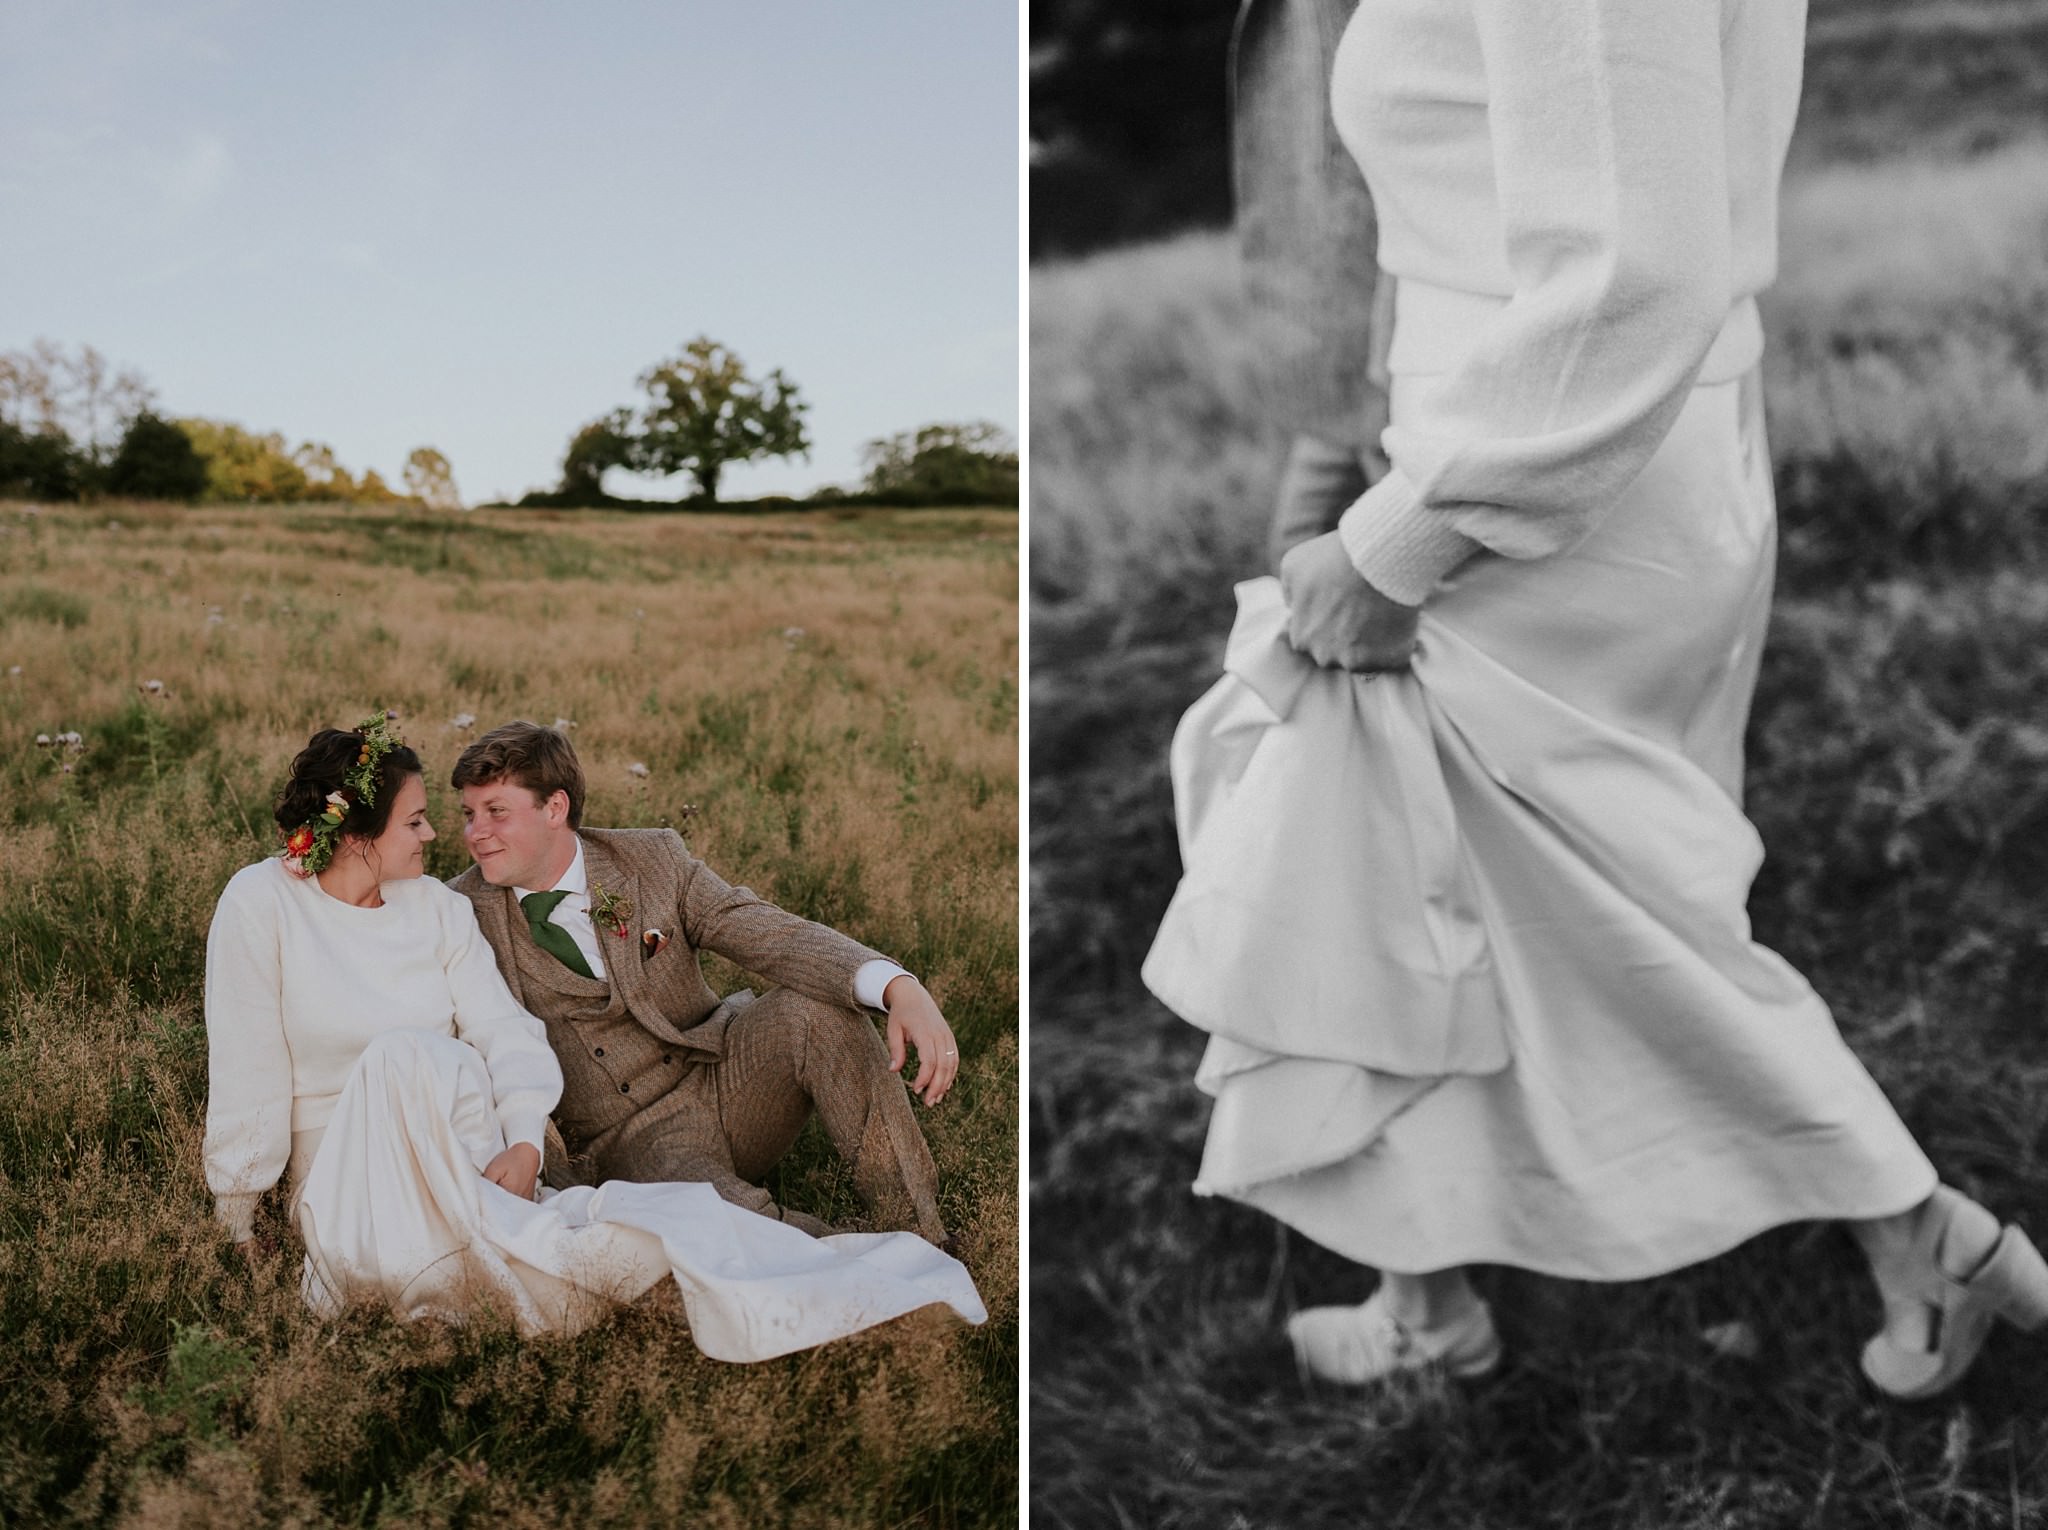 Festival Themed Wedding Photography, Devon | Imogen & Nat